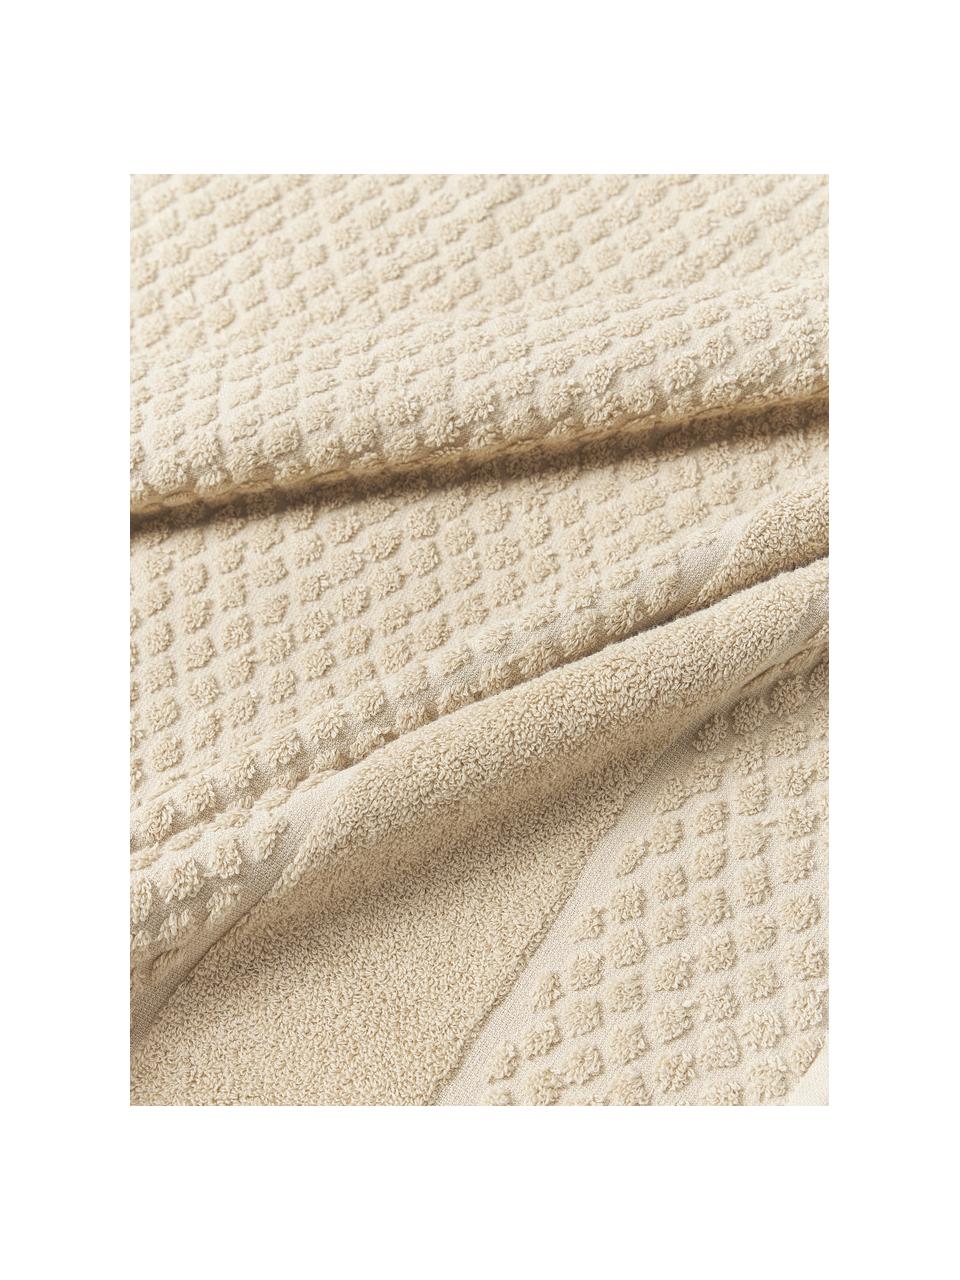 Set di asciugamani con motivo a nido d'ape Katharina, in varie misure, Beige, Set da 3 (asciugamano ospite, asciugamano e telo bagno)